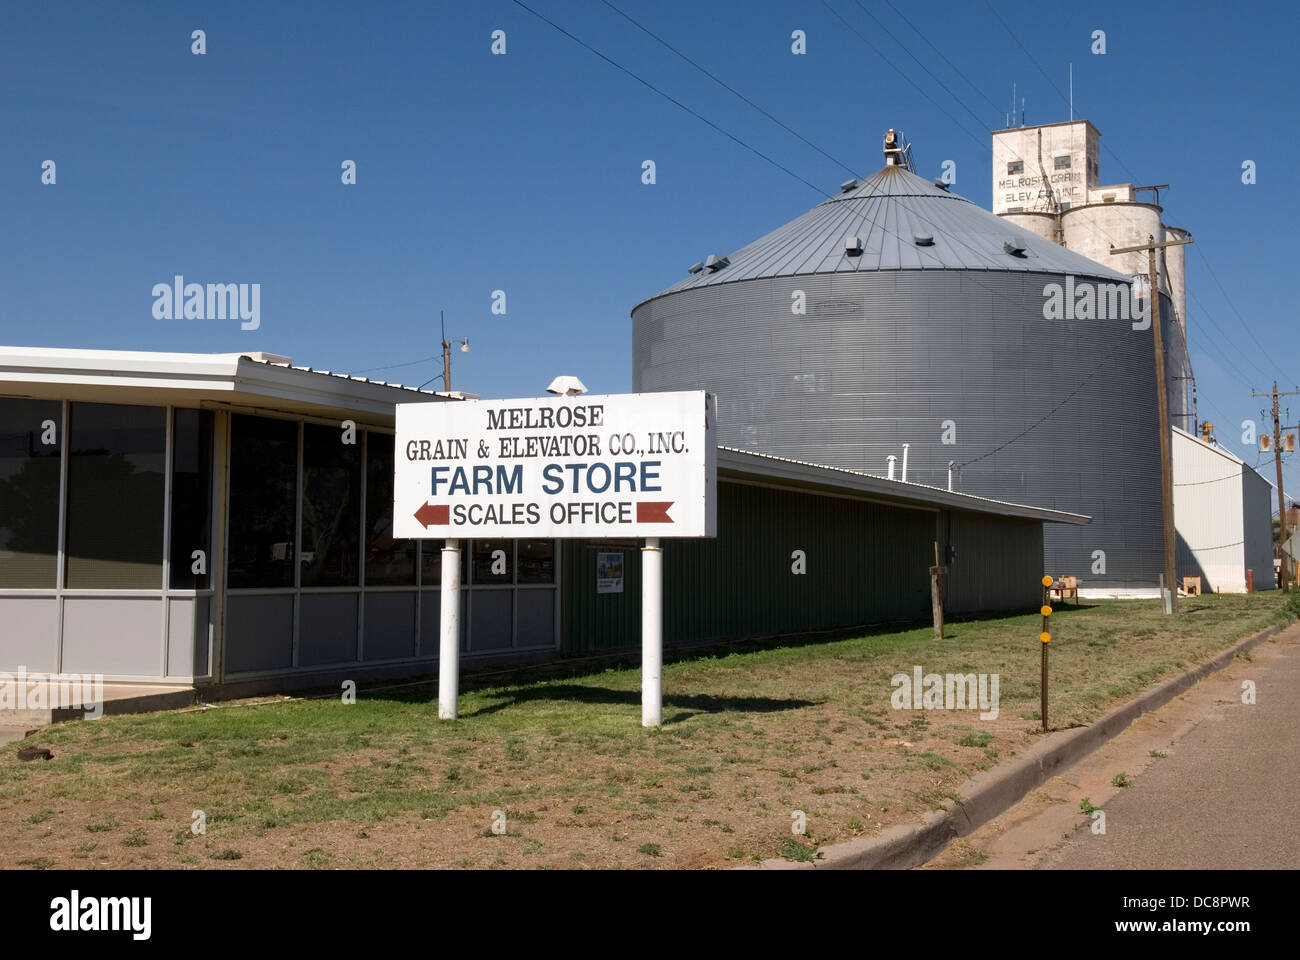 Melrose Grain and Elevator Company New Mexico USA Stock Photo